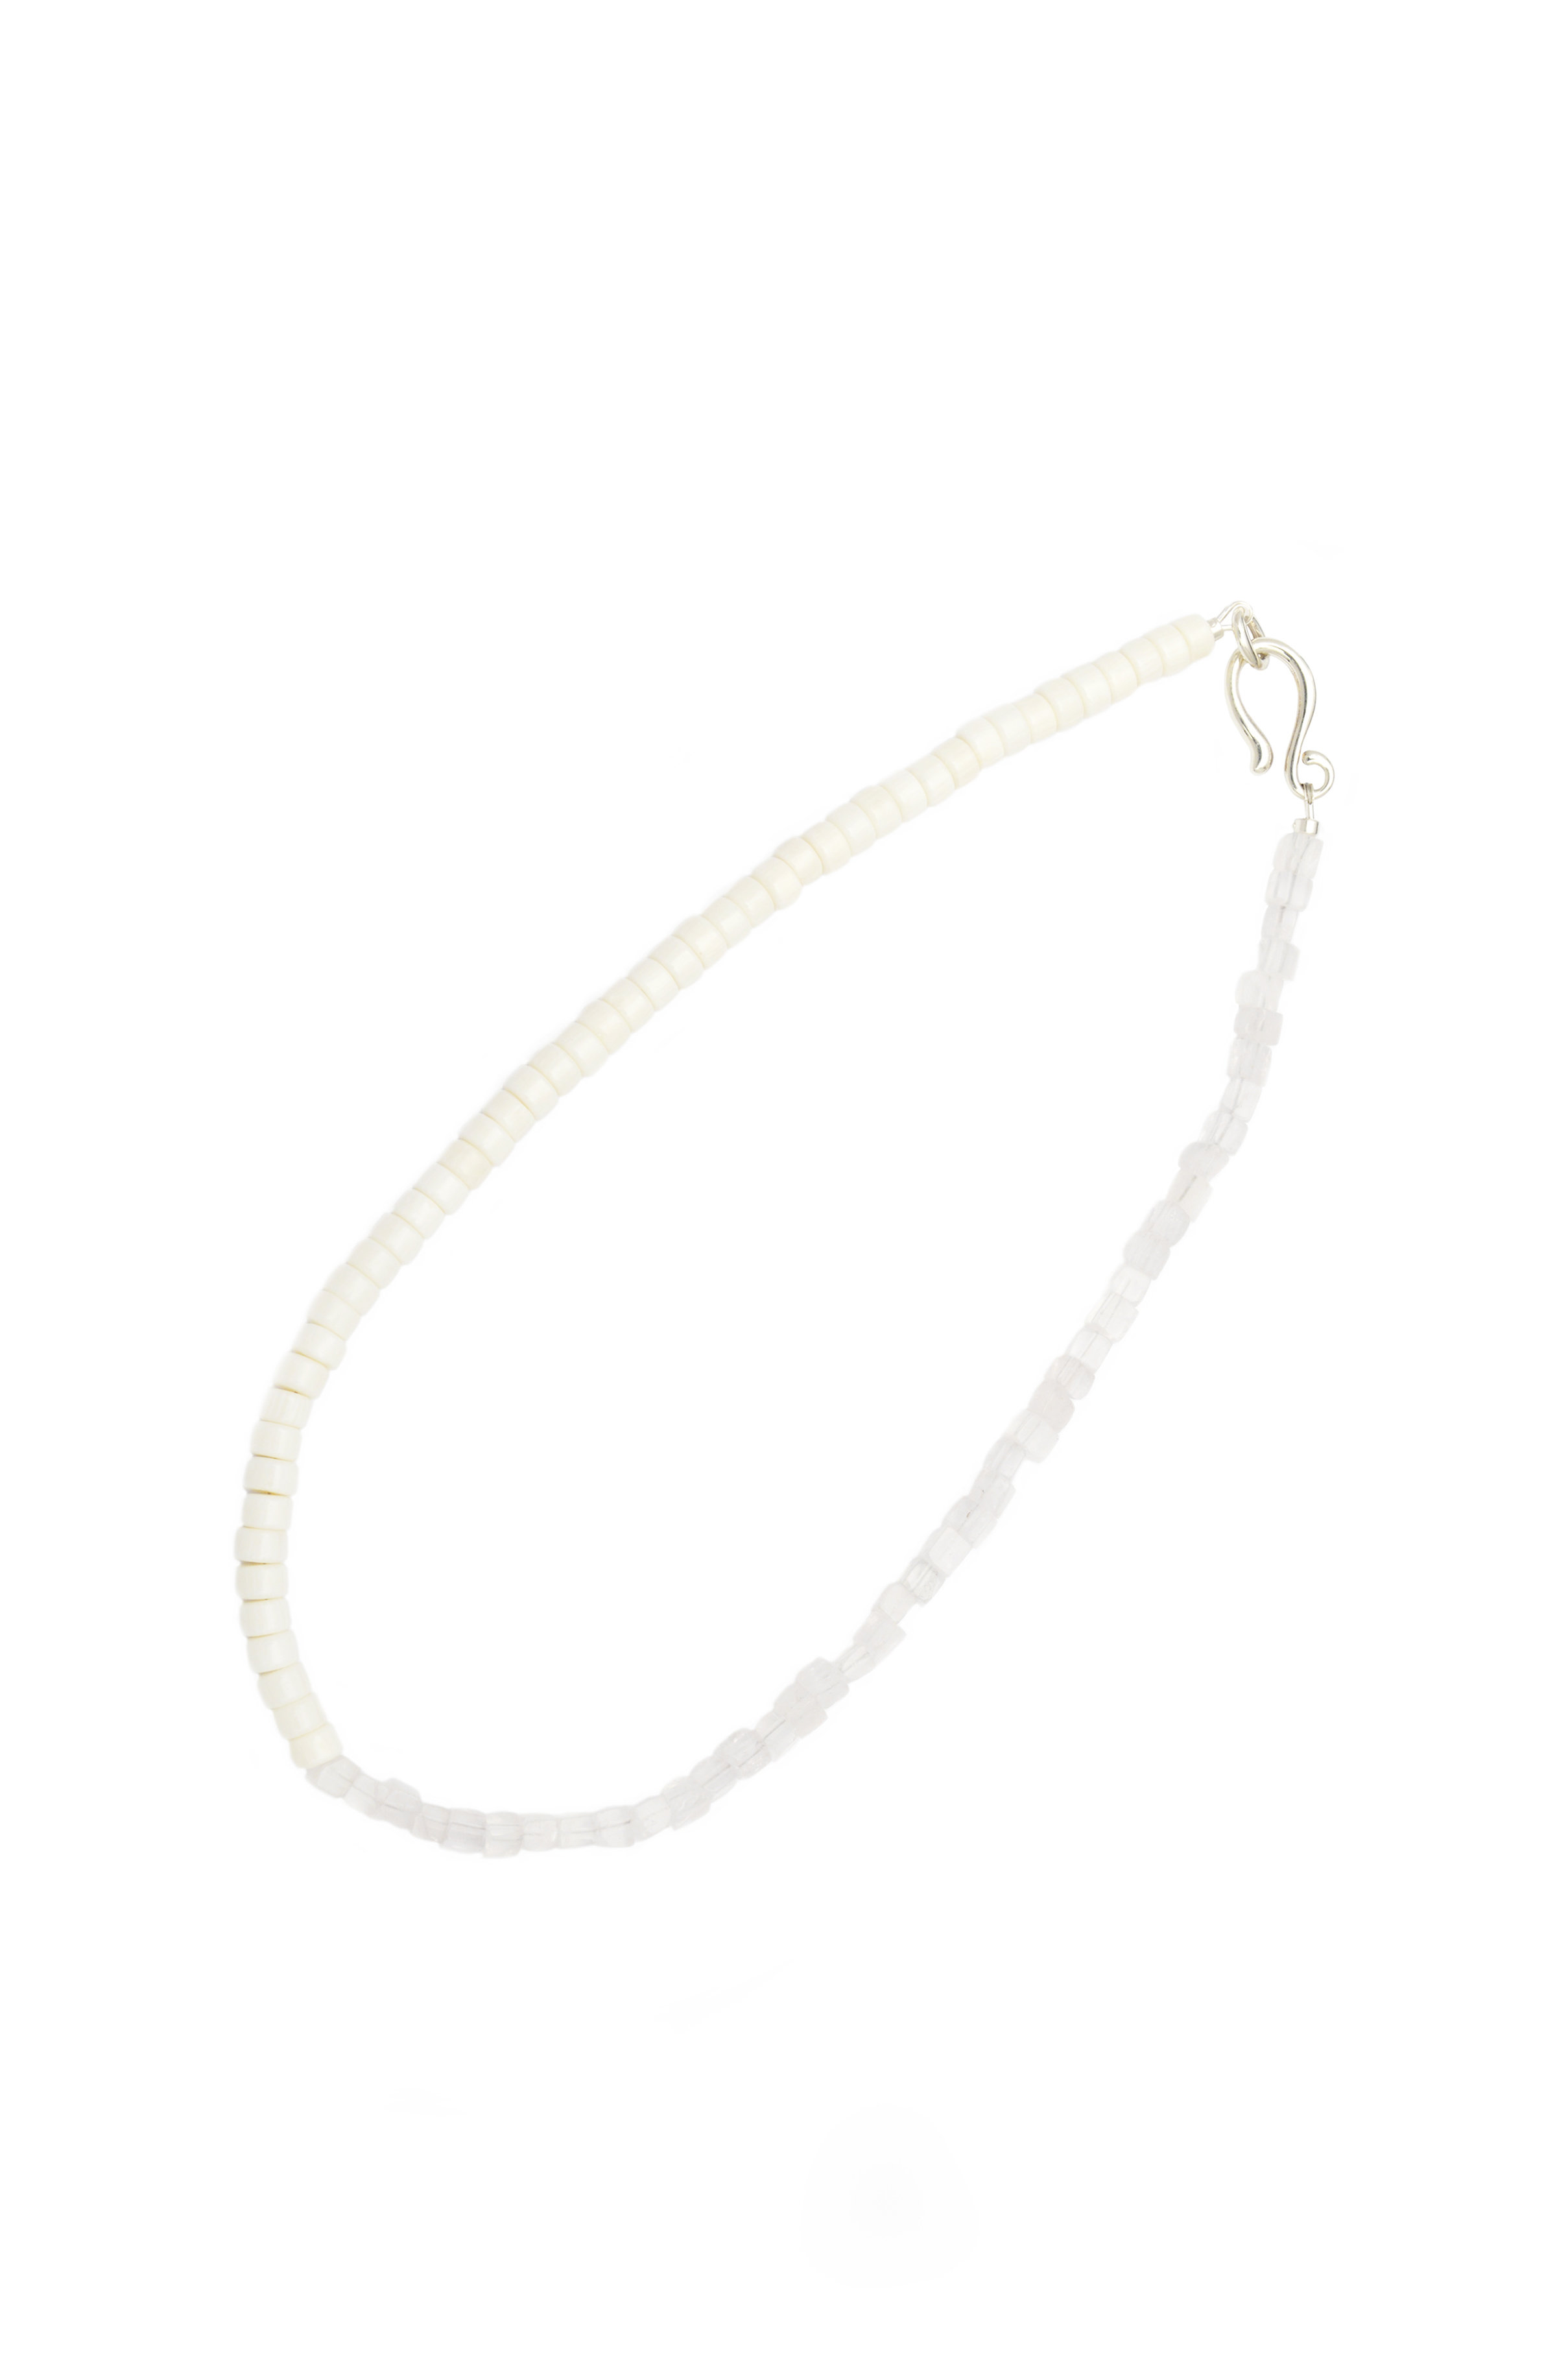  STEEN White Sands ネックレス (ホワイトクリア 40cm) スティーン ELLE SHOP